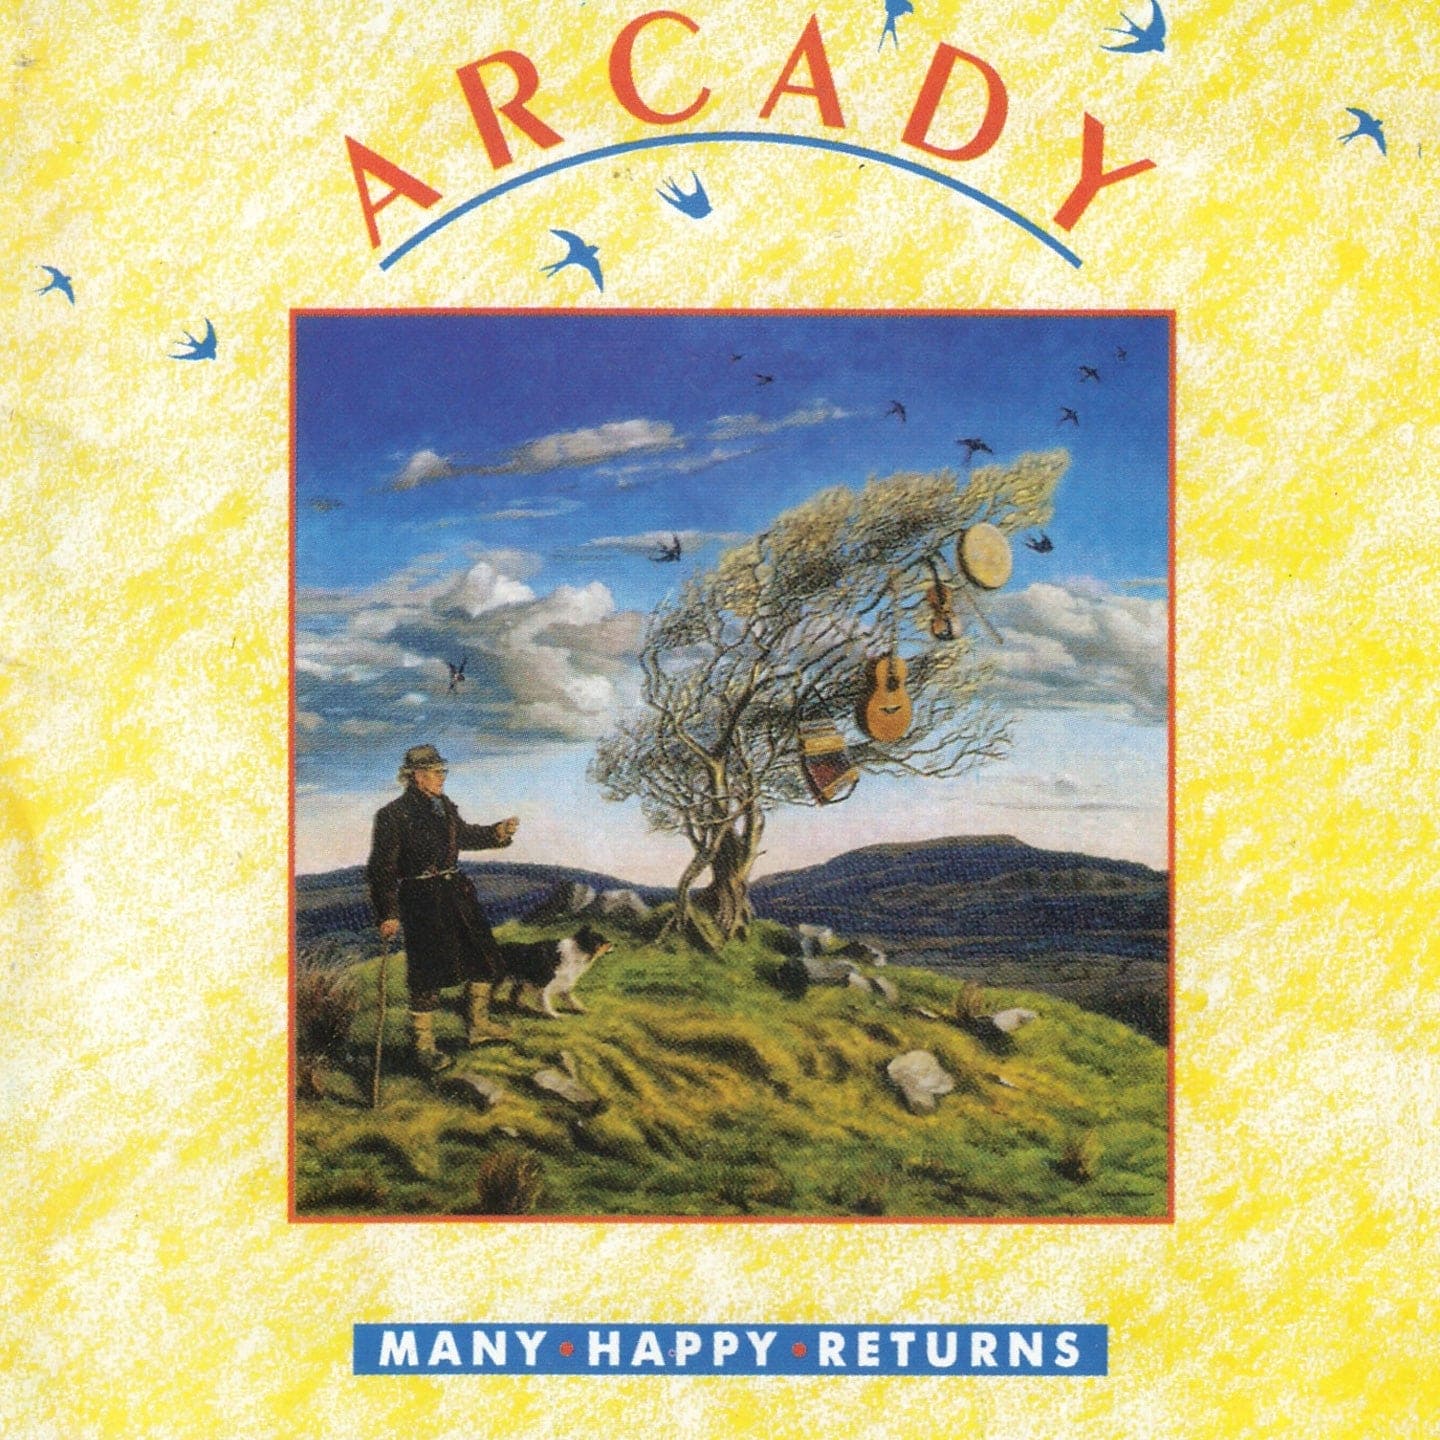 Many Happy Returns - Arcady [CD]